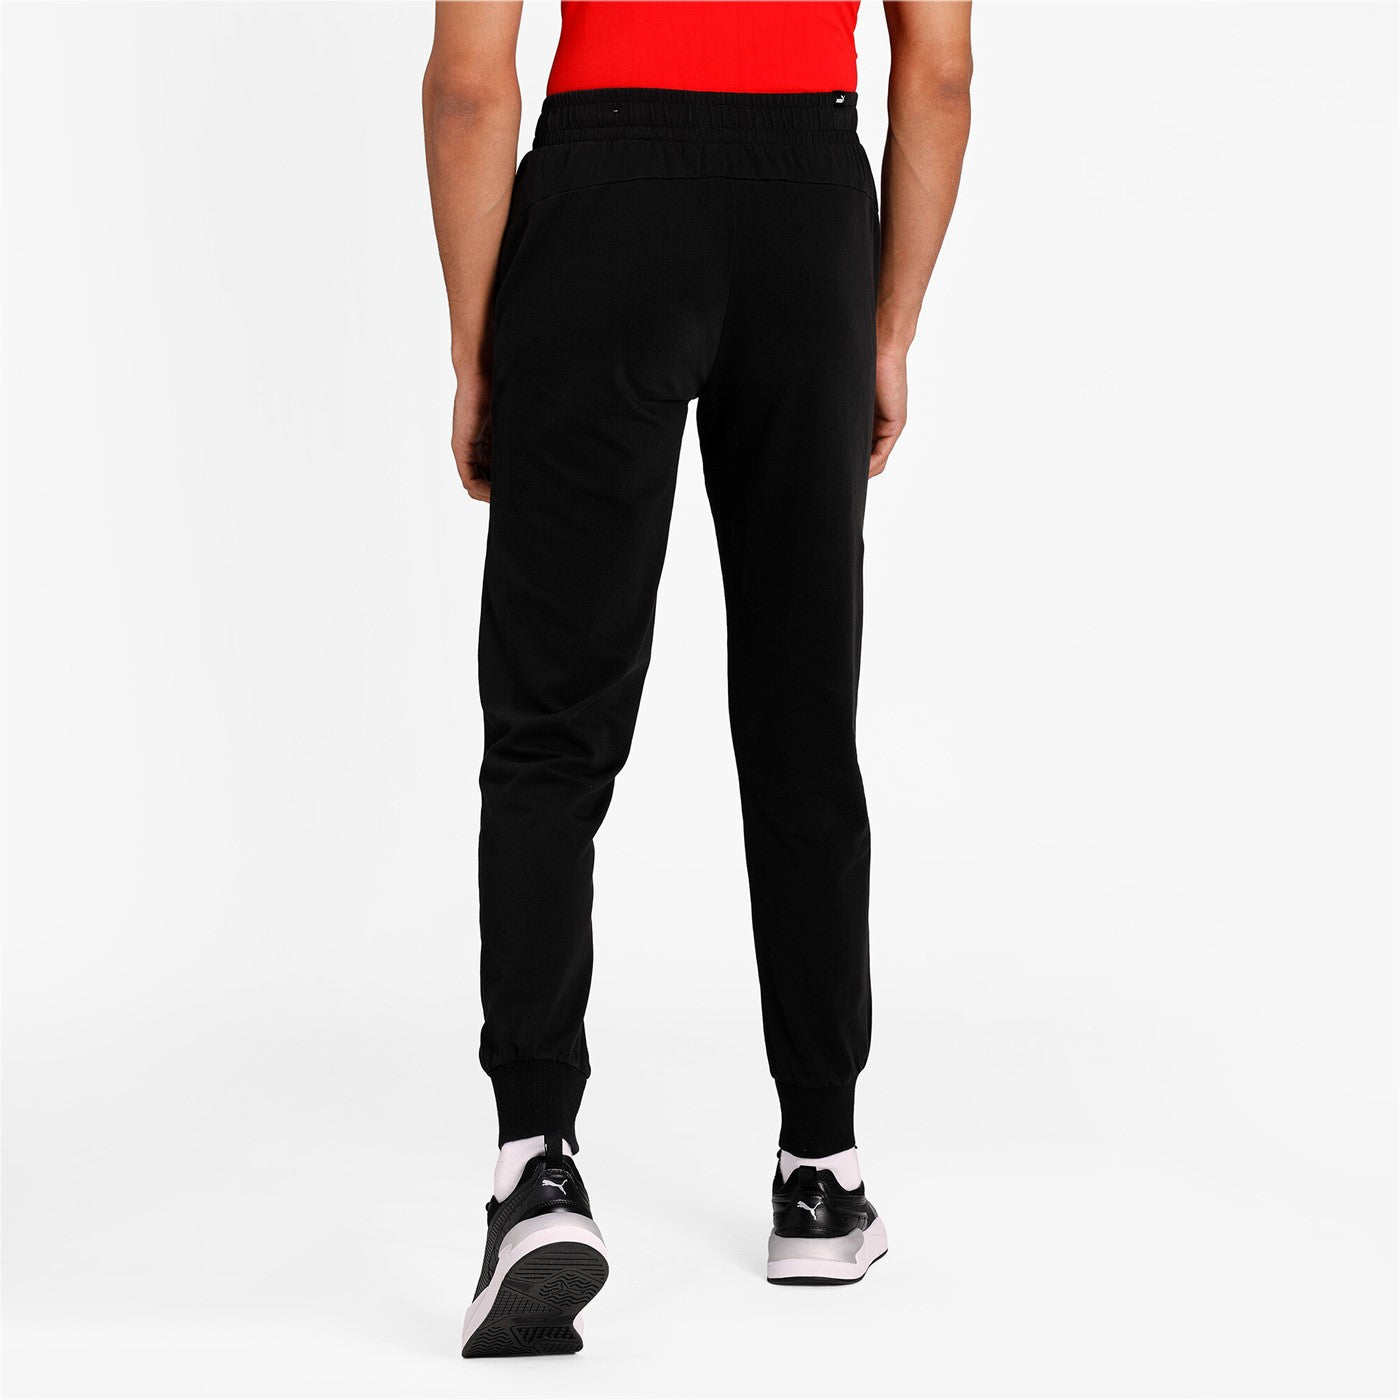 Puma pantalone sportivo da uomo in cotone jersey ESS Jersey Pants op 586747 01 black